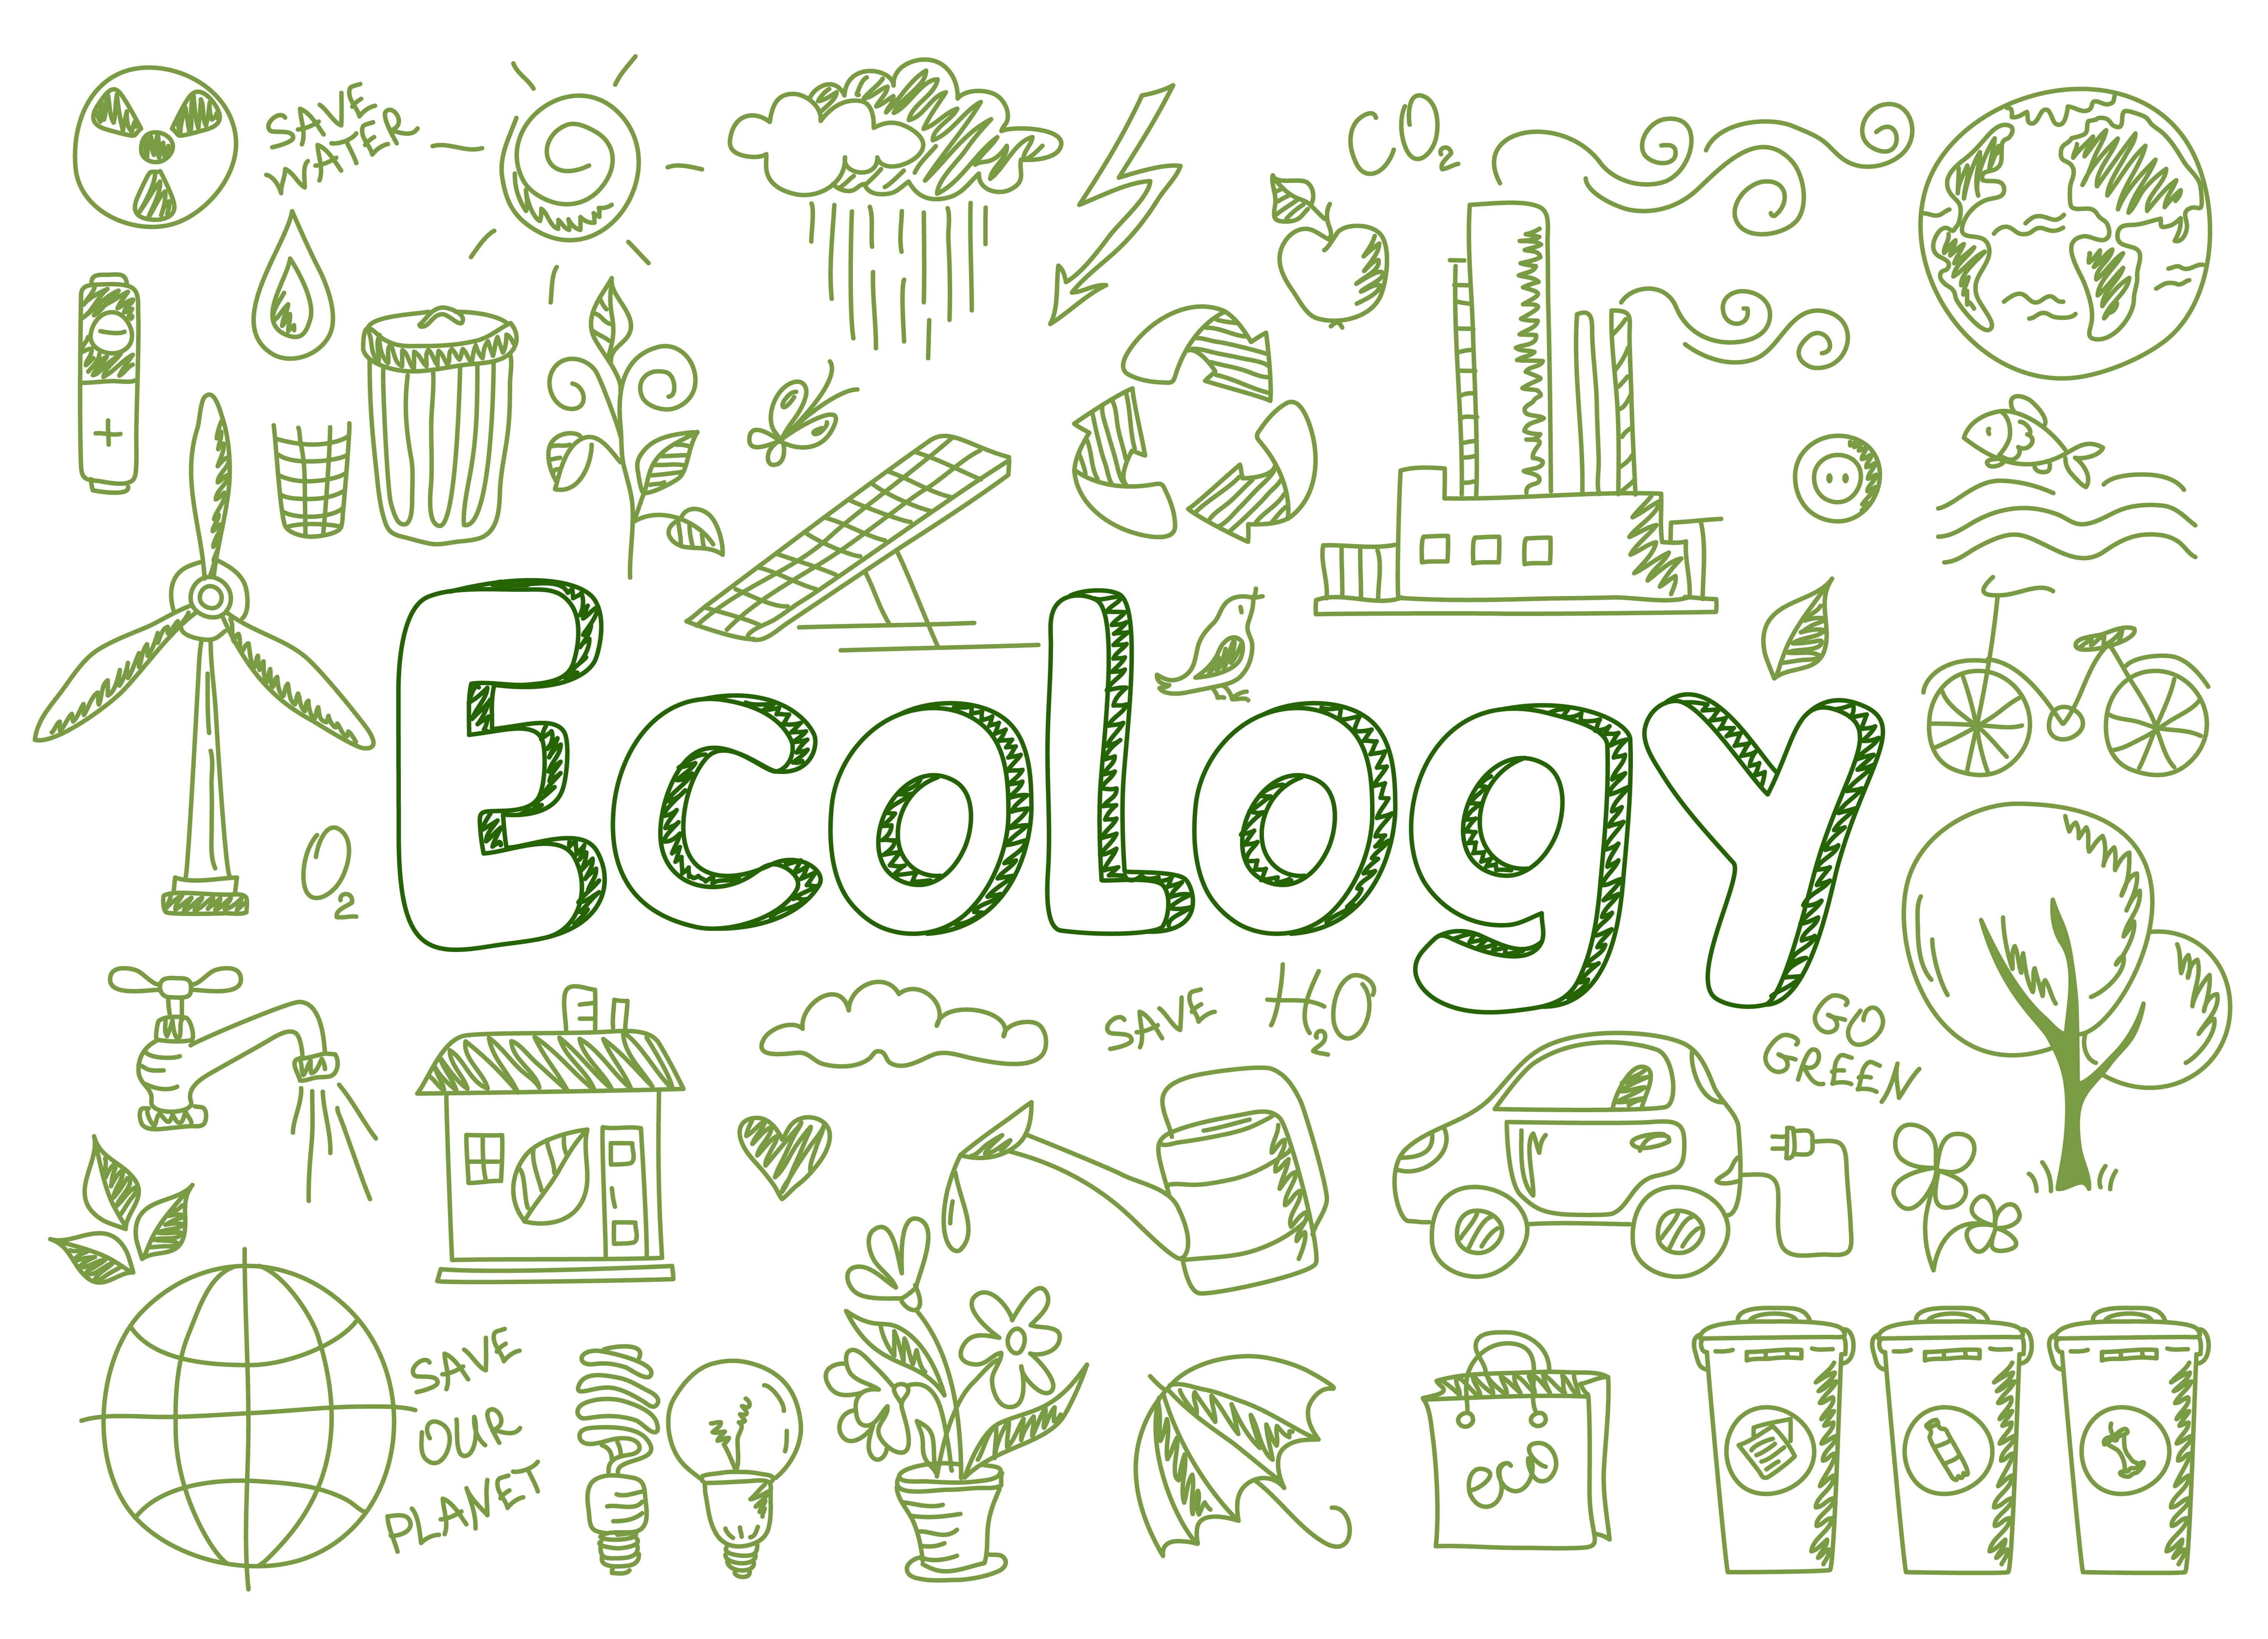 ecologists study university